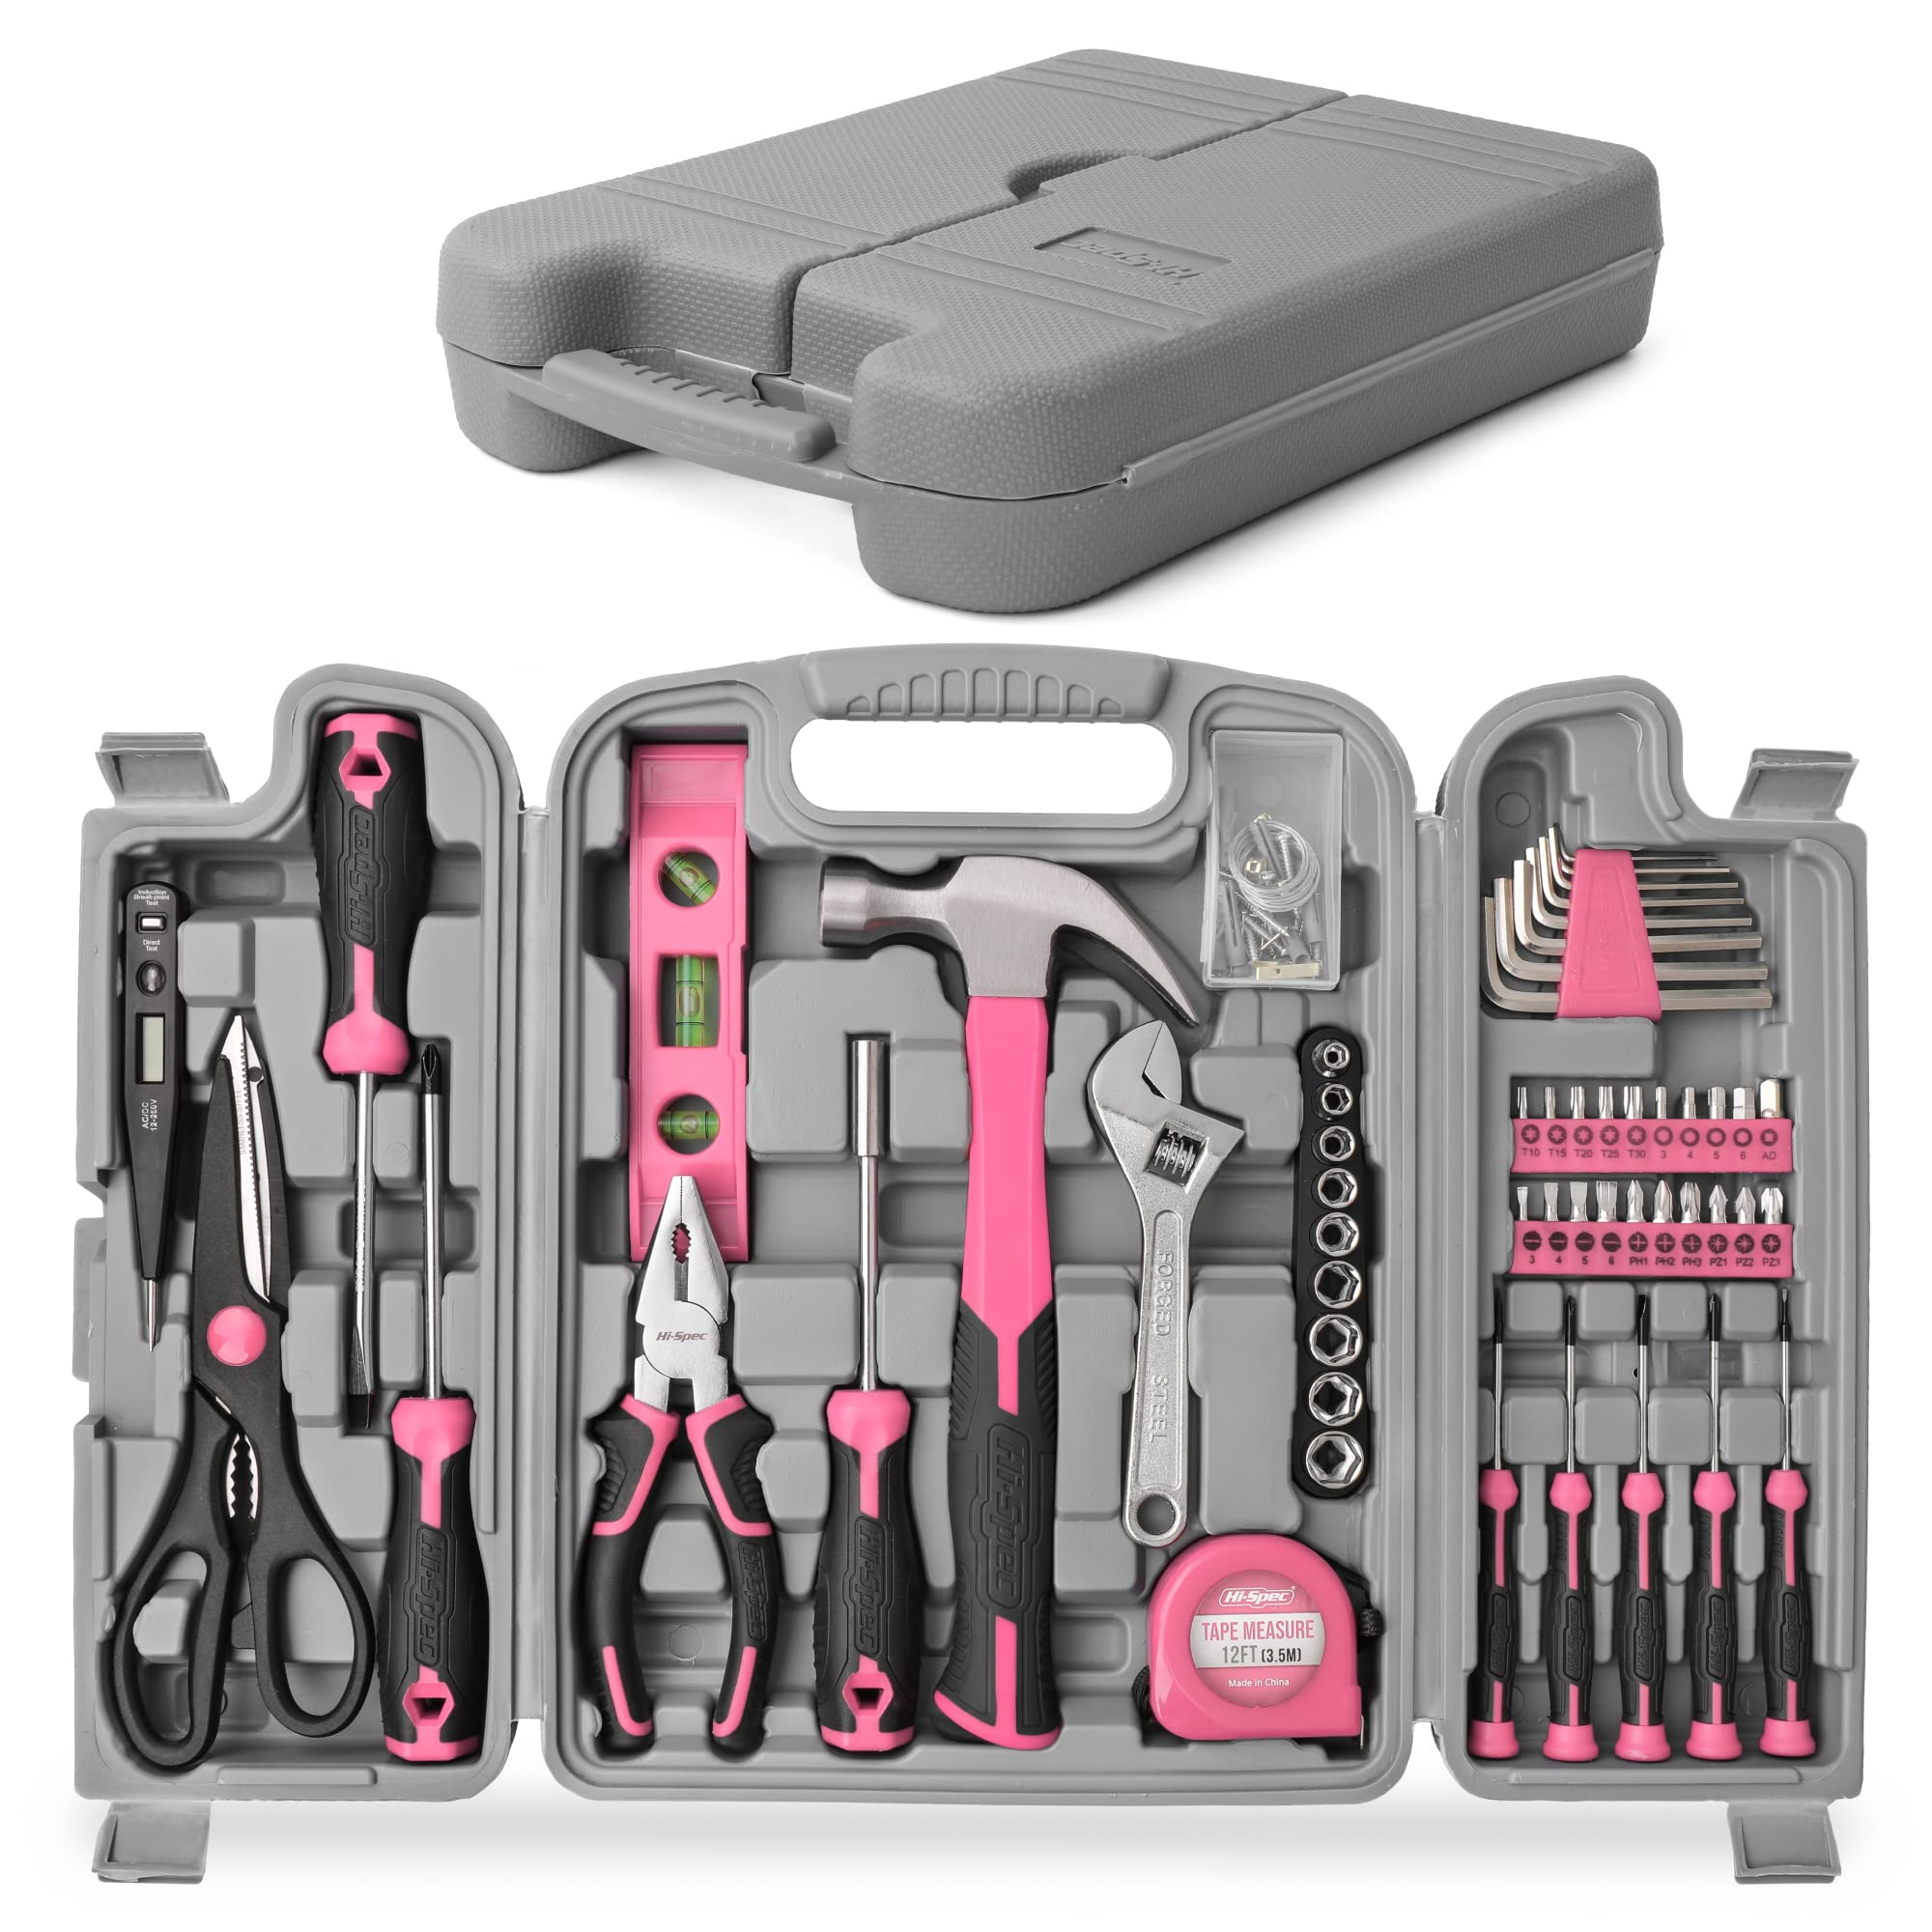 Hi-Spec 88pc Pink Home DIY Tool Kit Bundle with 3.6V Small USB Power Electric Screwdriver Set